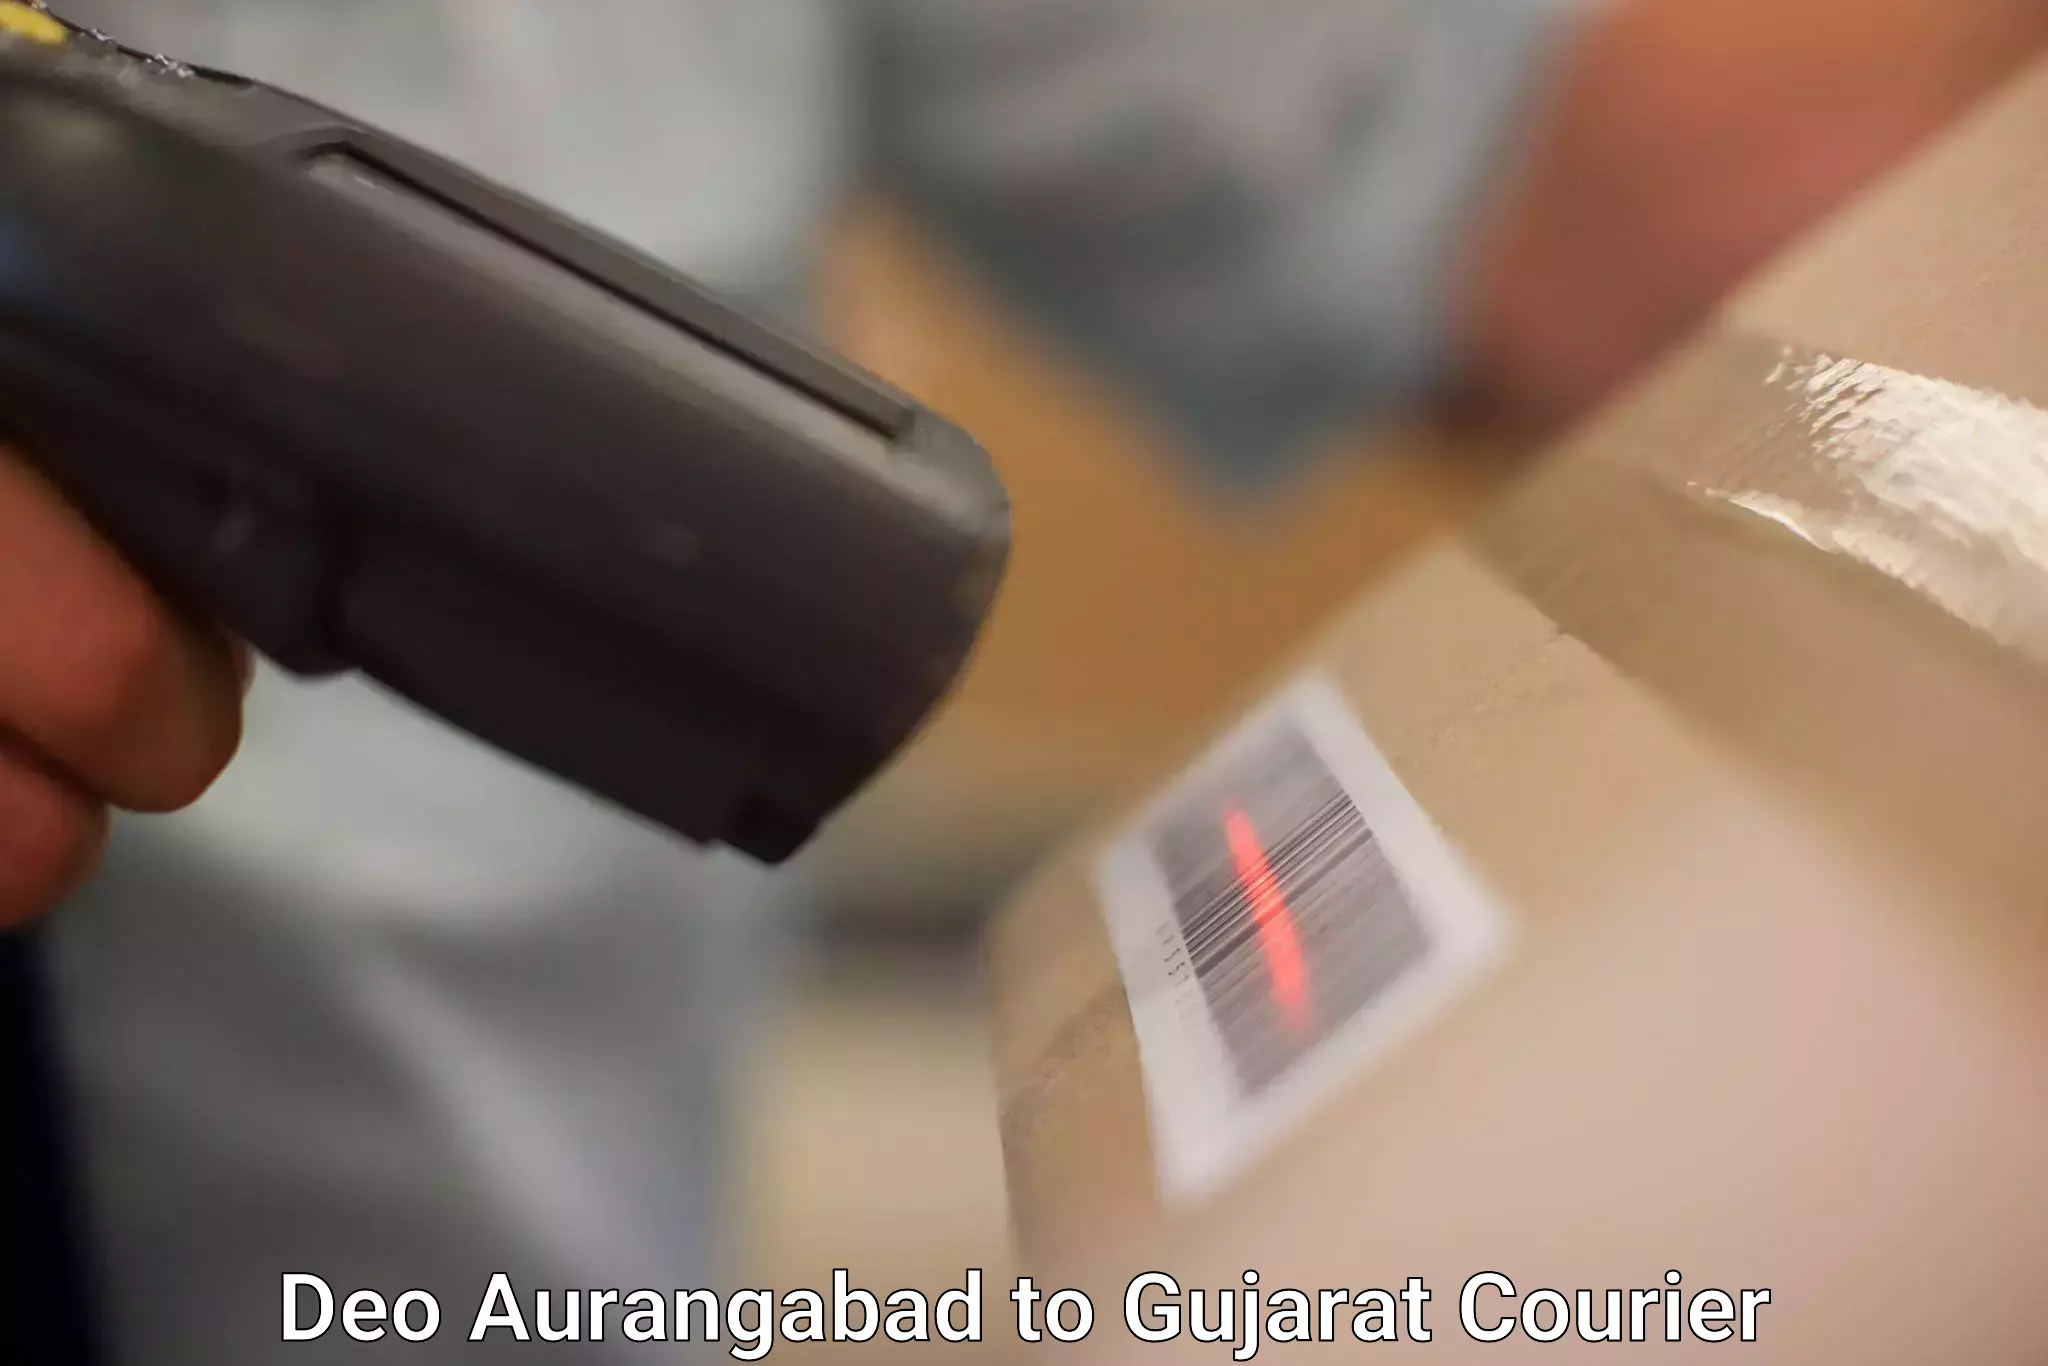 Flexible parcel services Deo Aurangabad to Ahmedabad